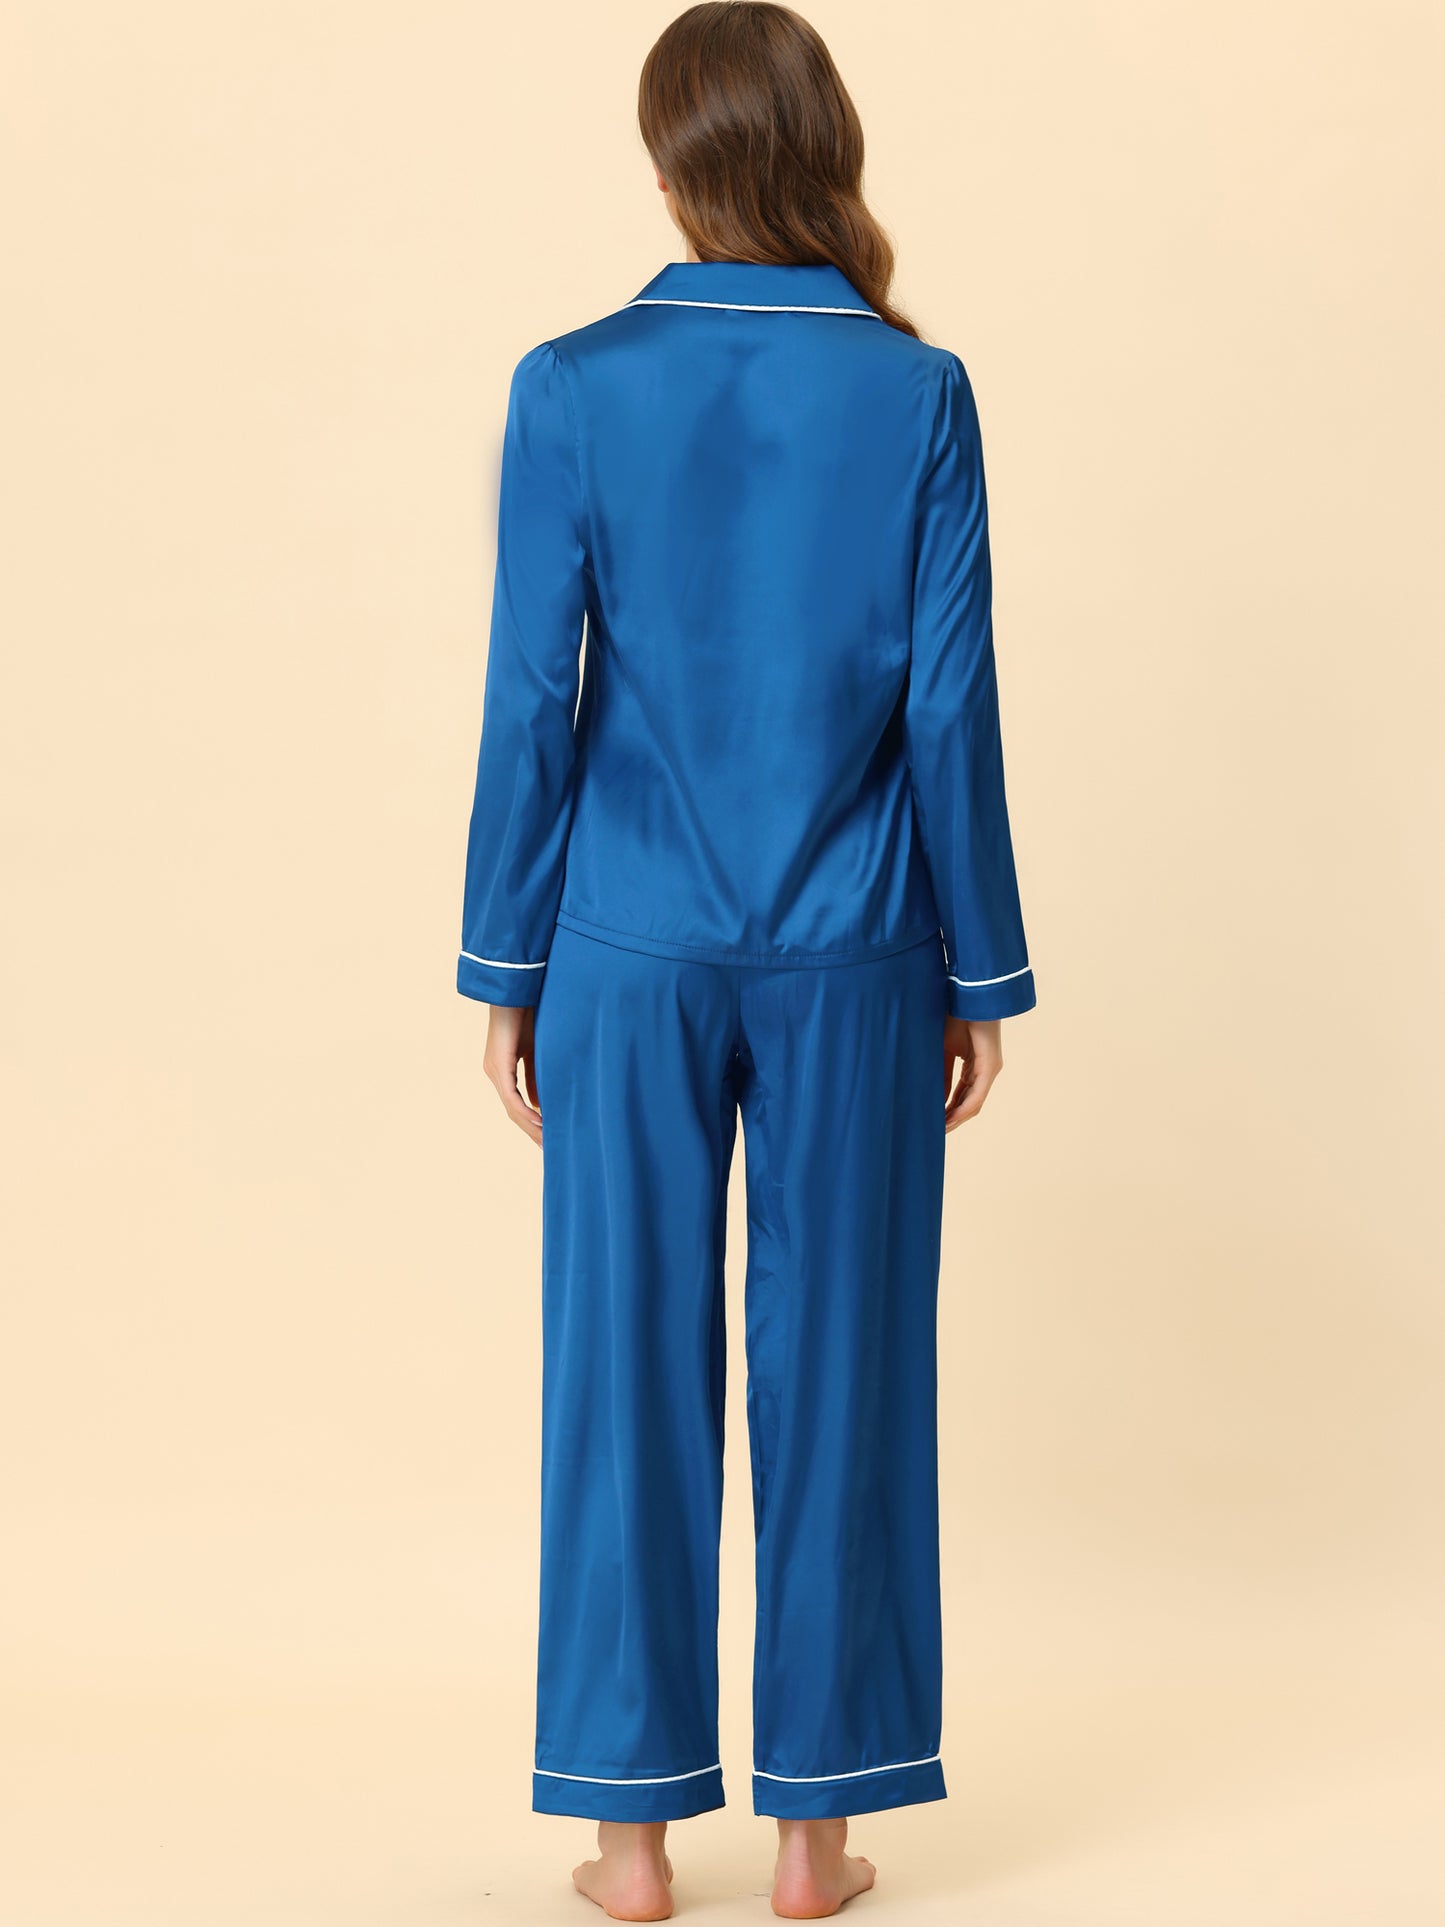 cheibear Pajama Loungewear Long Sleeves Tops and Pants Satin Sets Blue